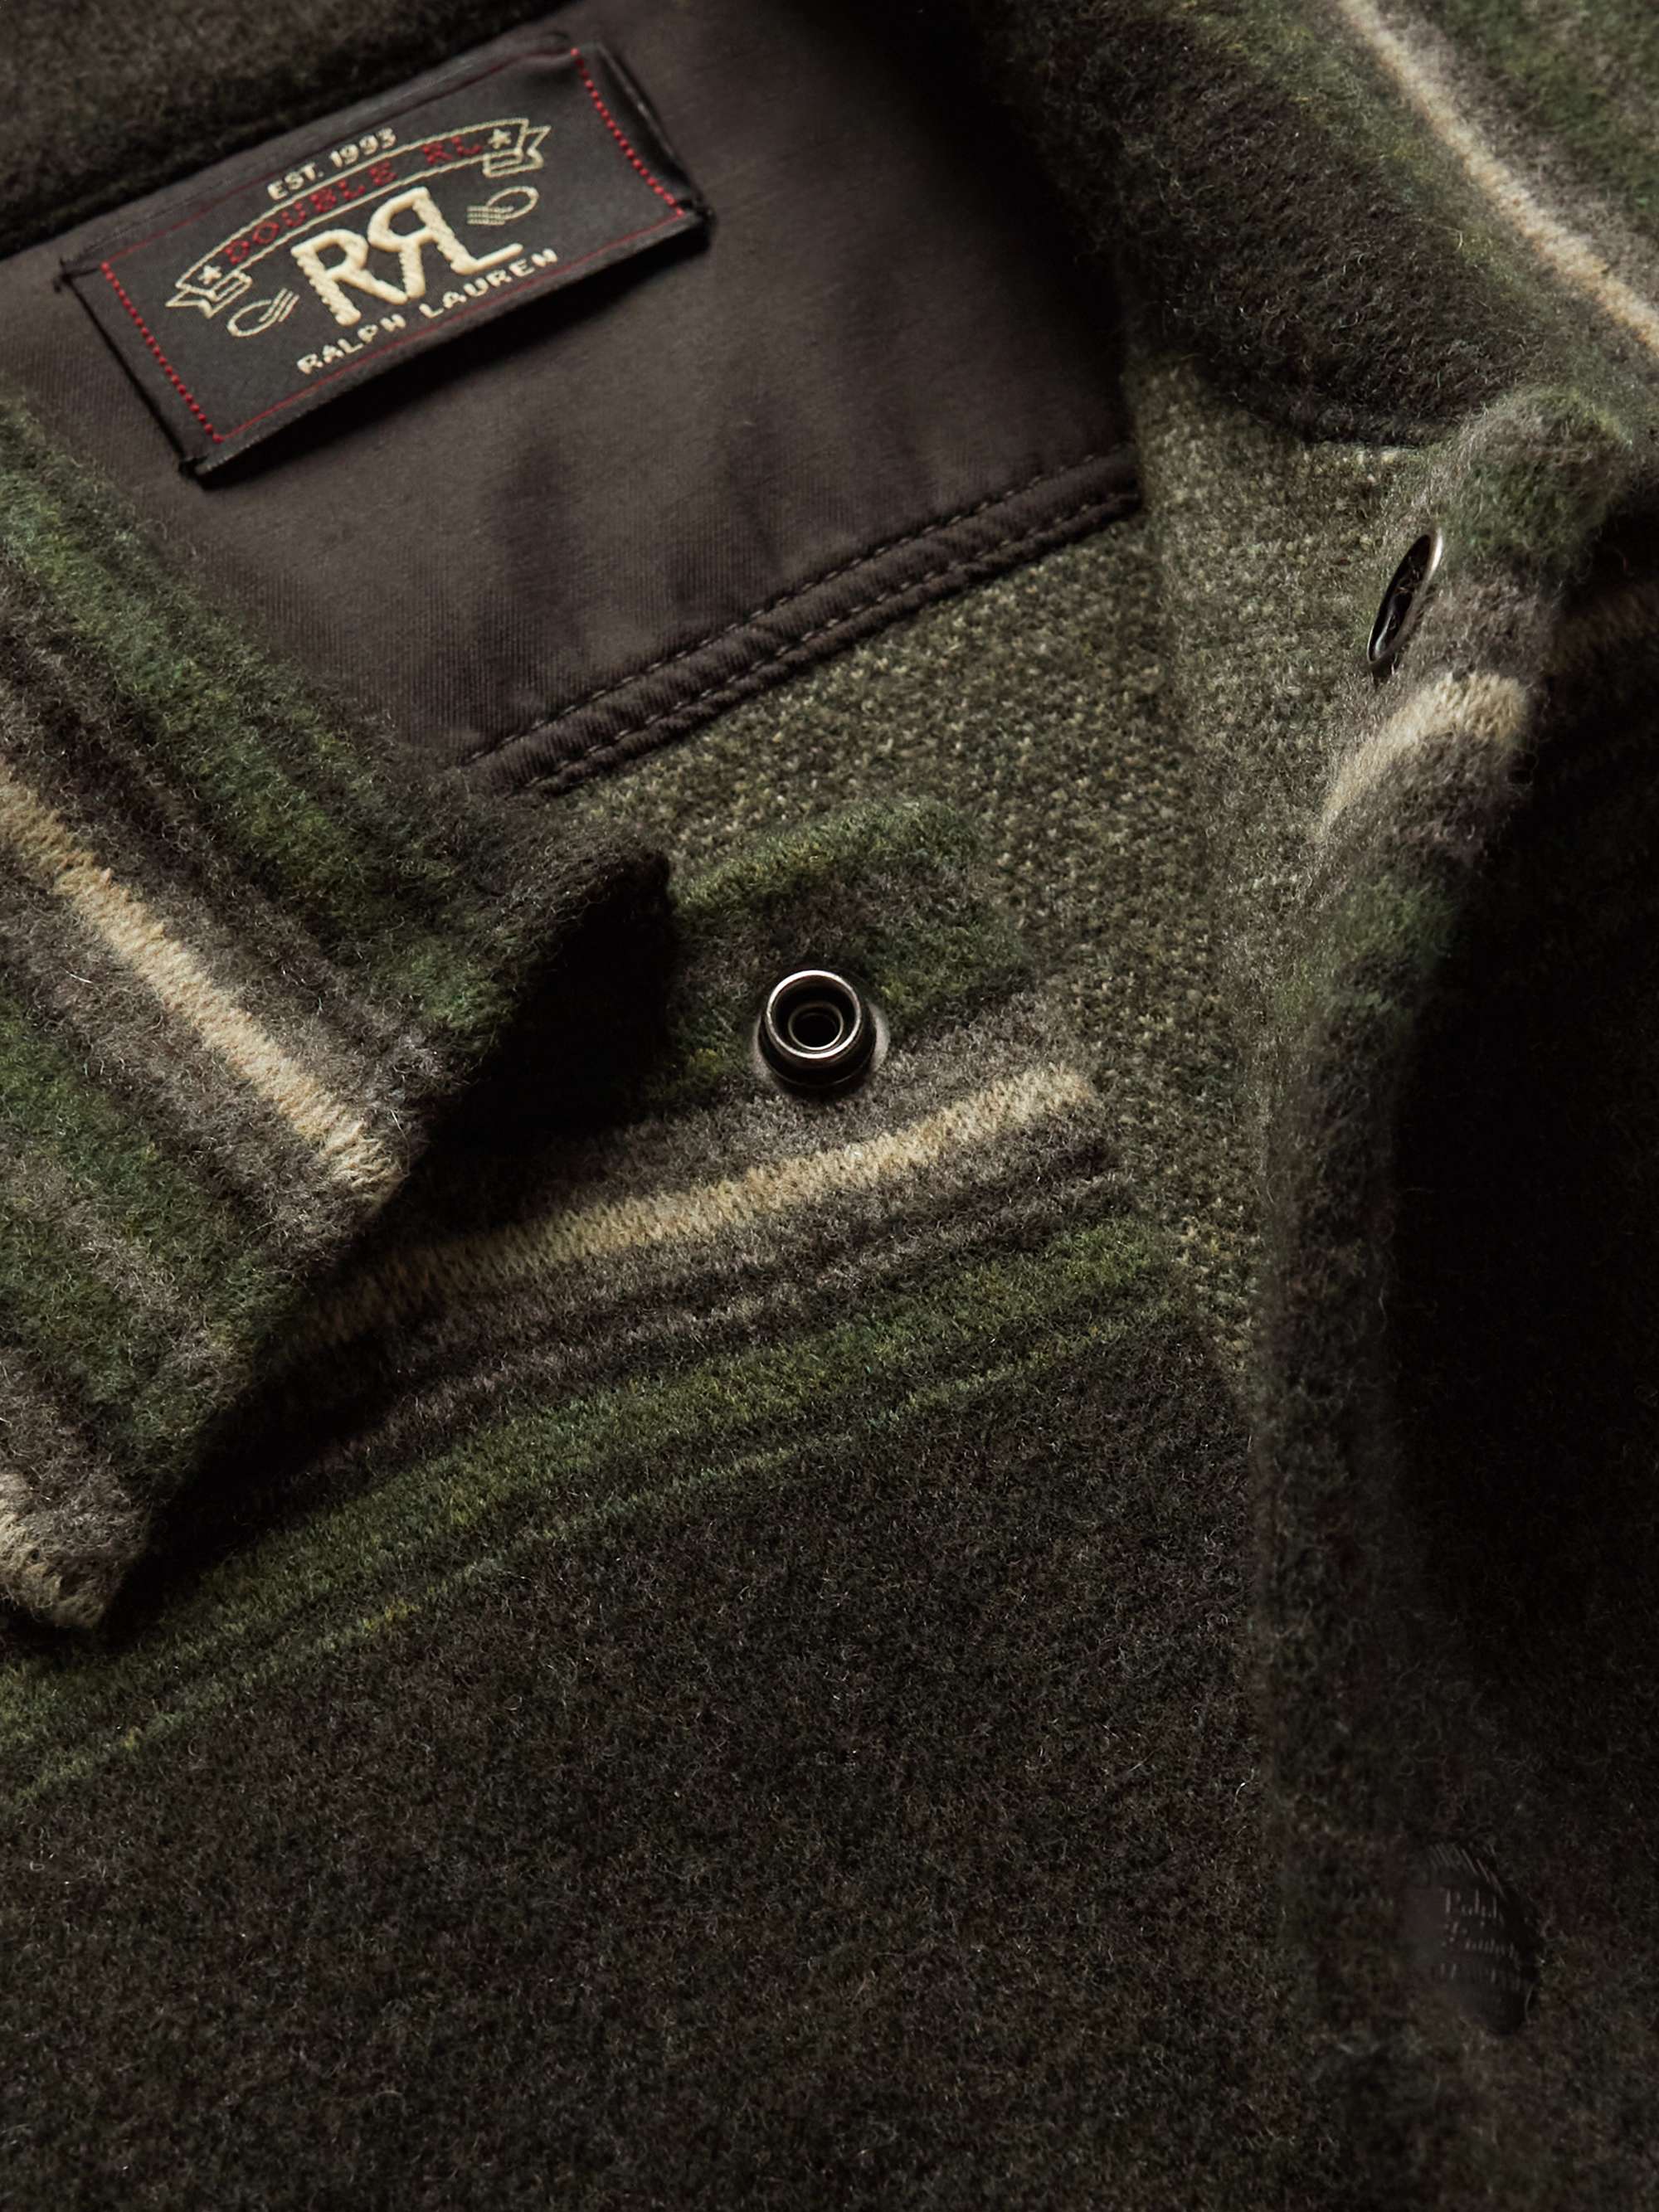 RRL Striped Wool and Cashmere-Blend Jacquard Shirt Jacket